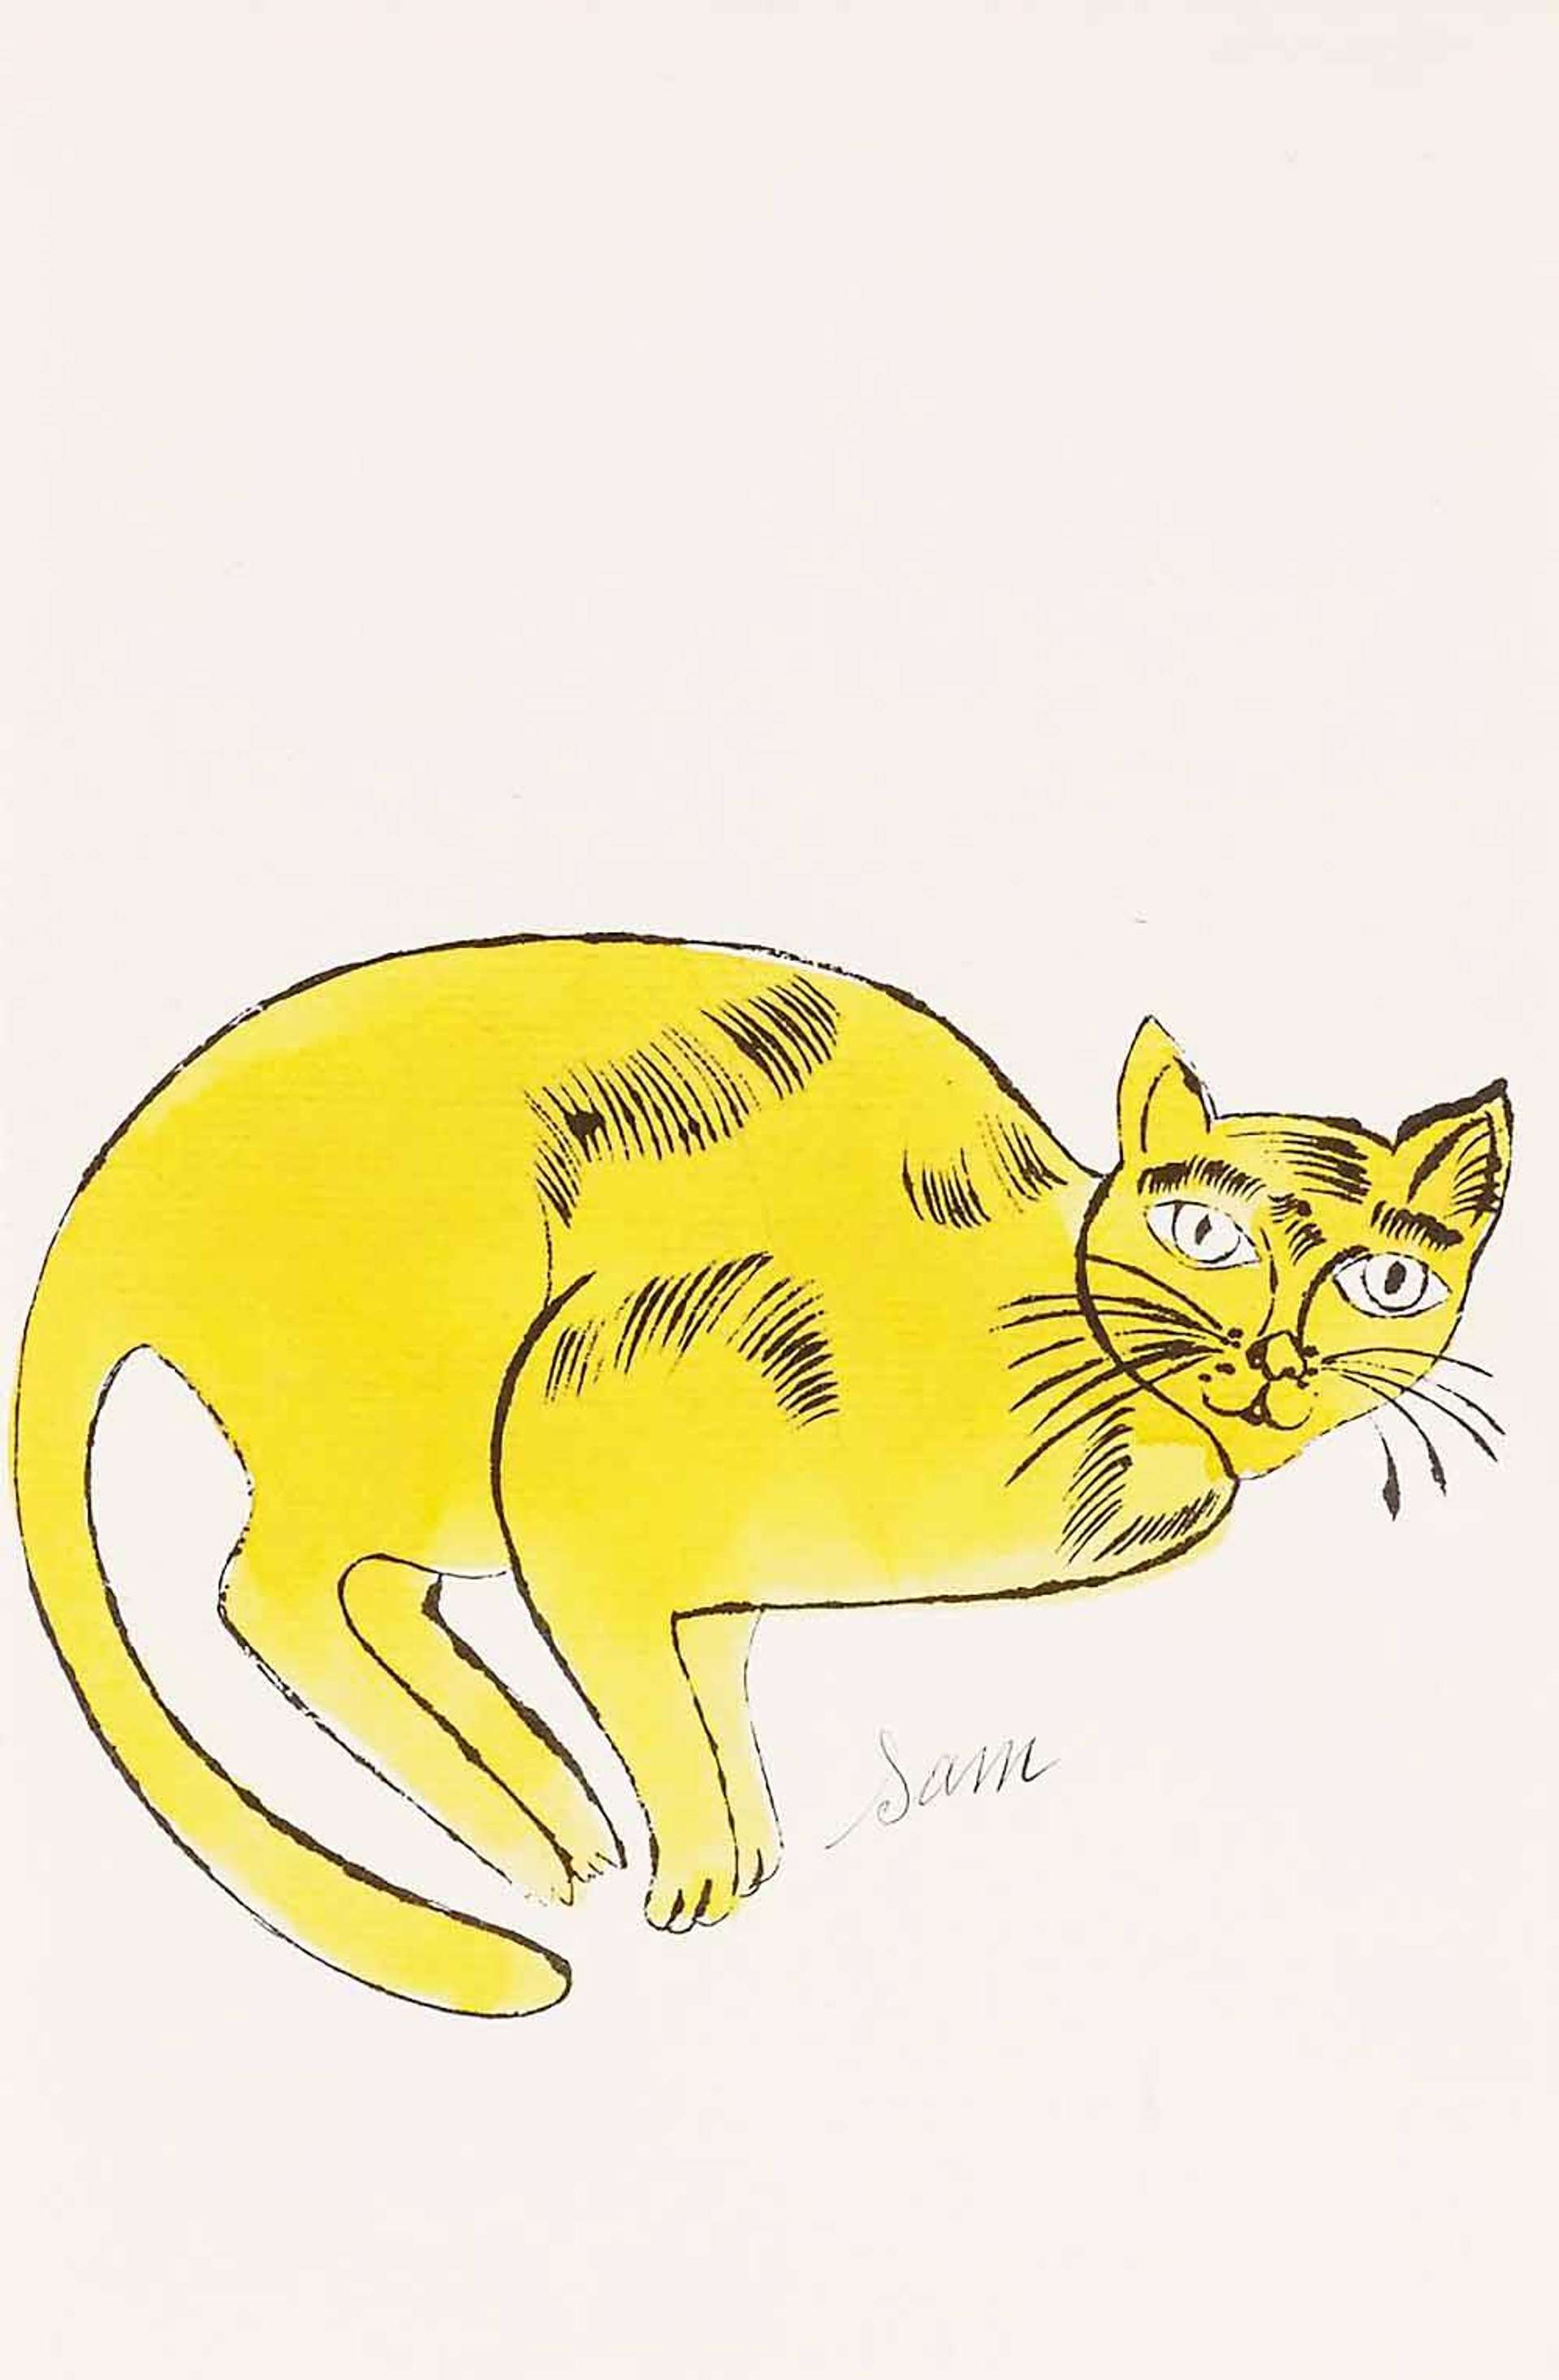 Cats Named Sam IV 67 by Andy Warhol - MyArtBroker